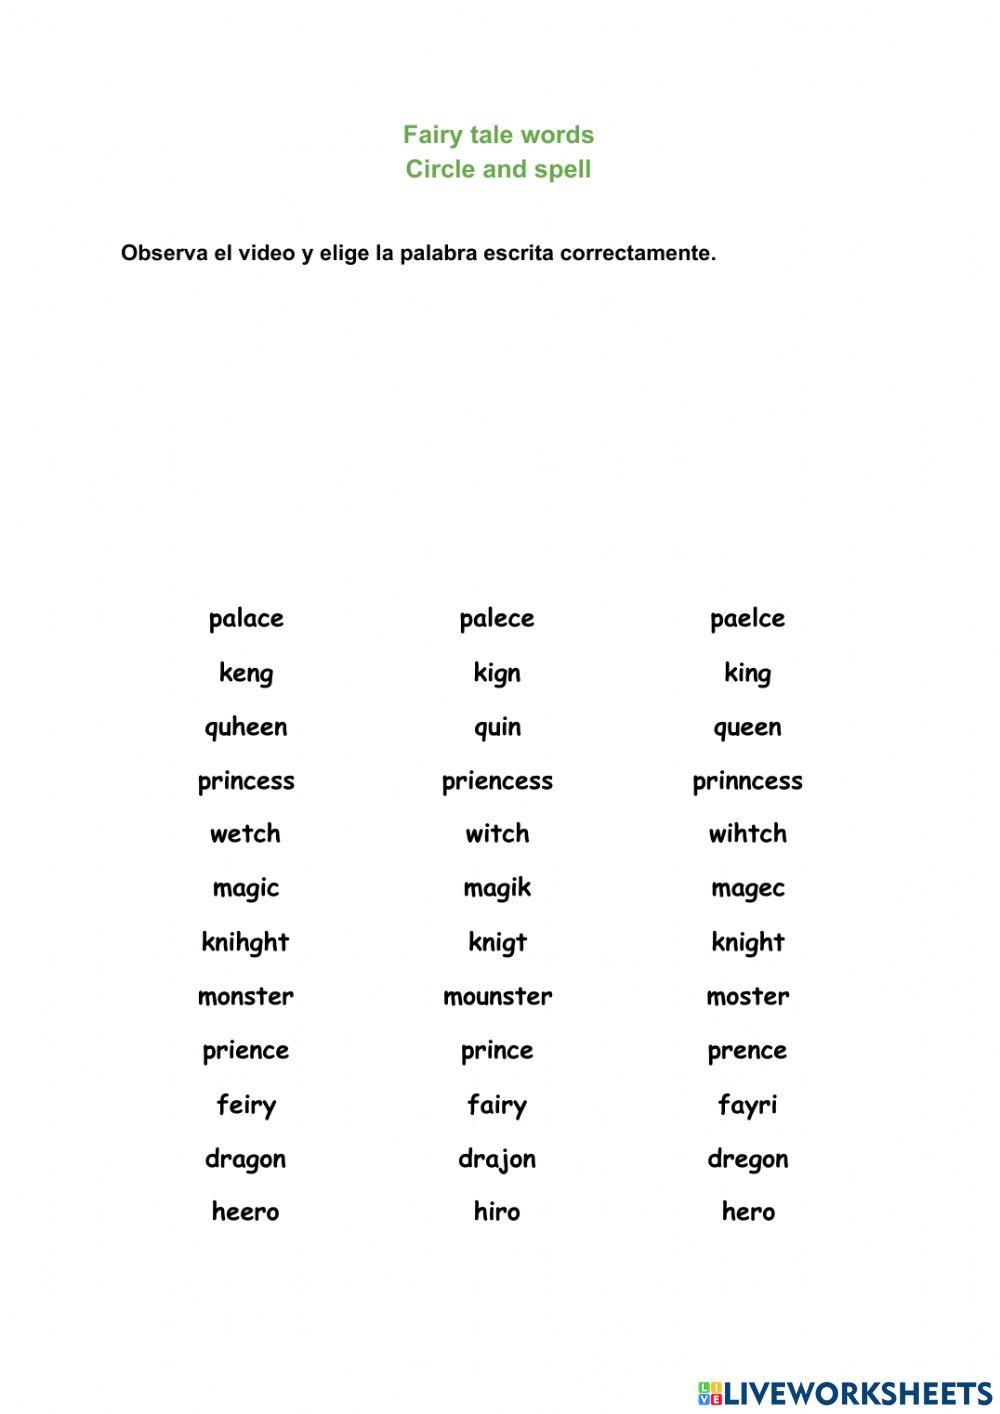 Fairy tale vocabulary